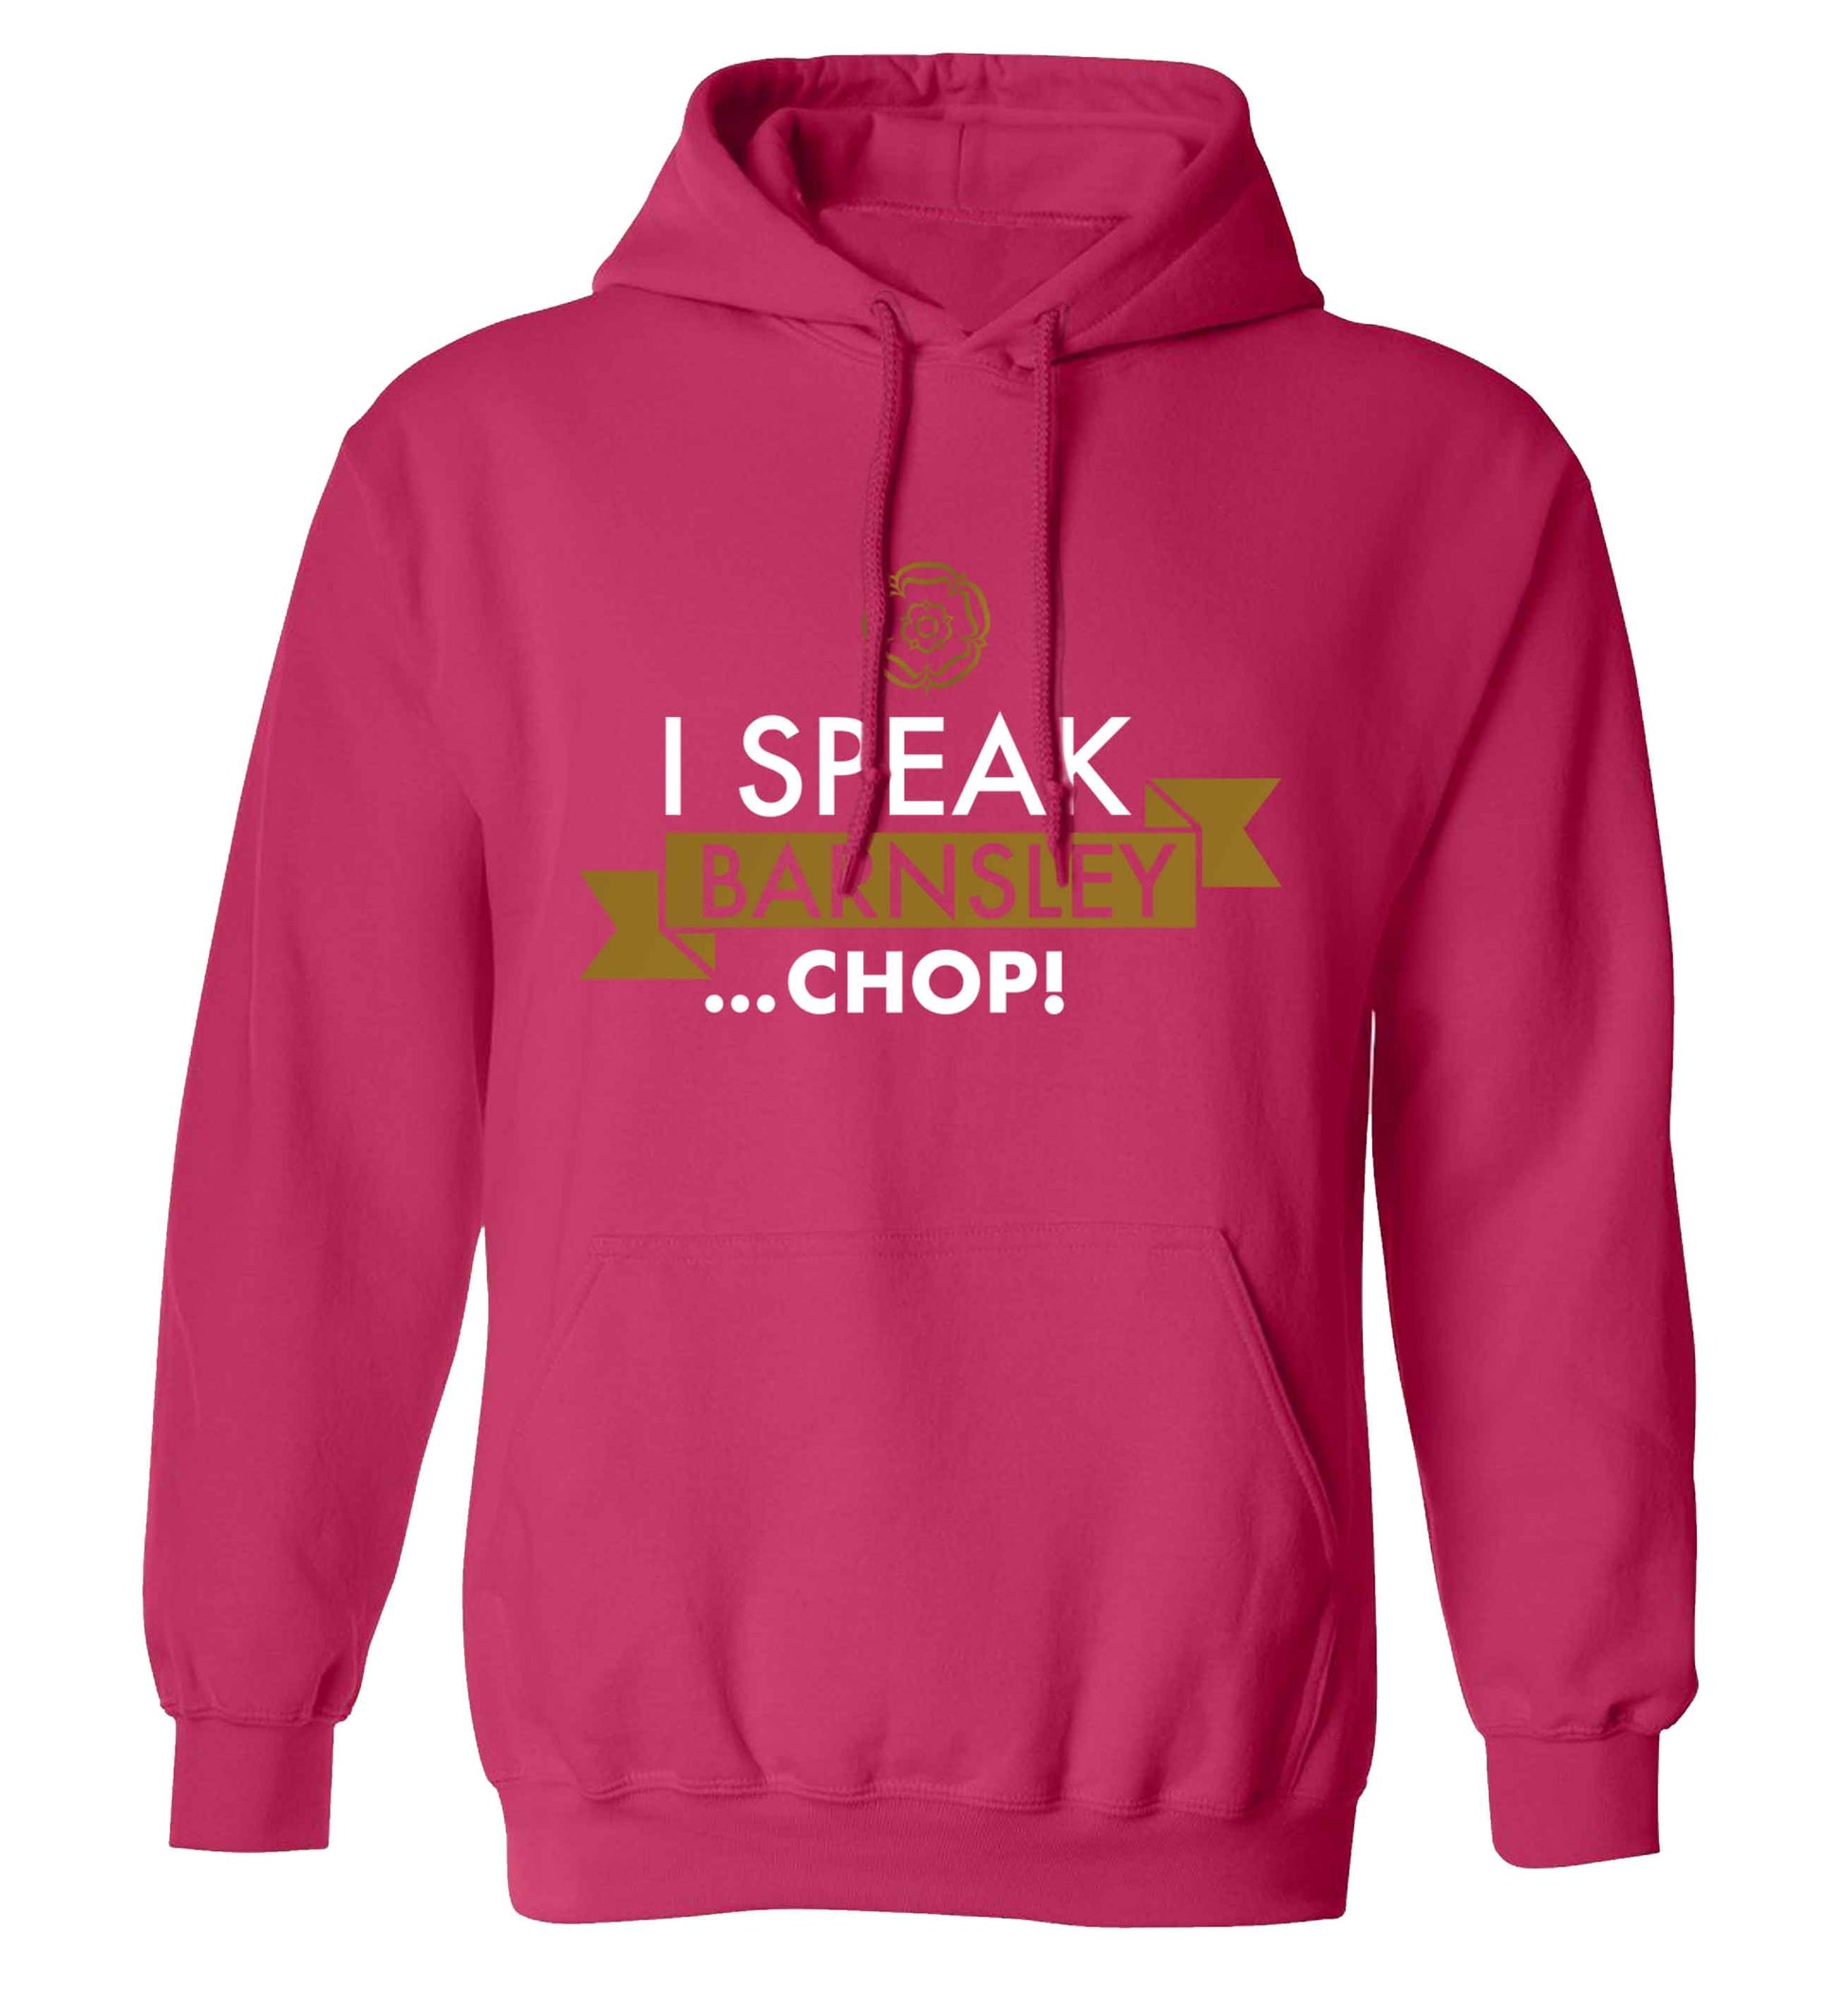 I speak Barnsley...chop! adults unisex pink hoodie 2XL